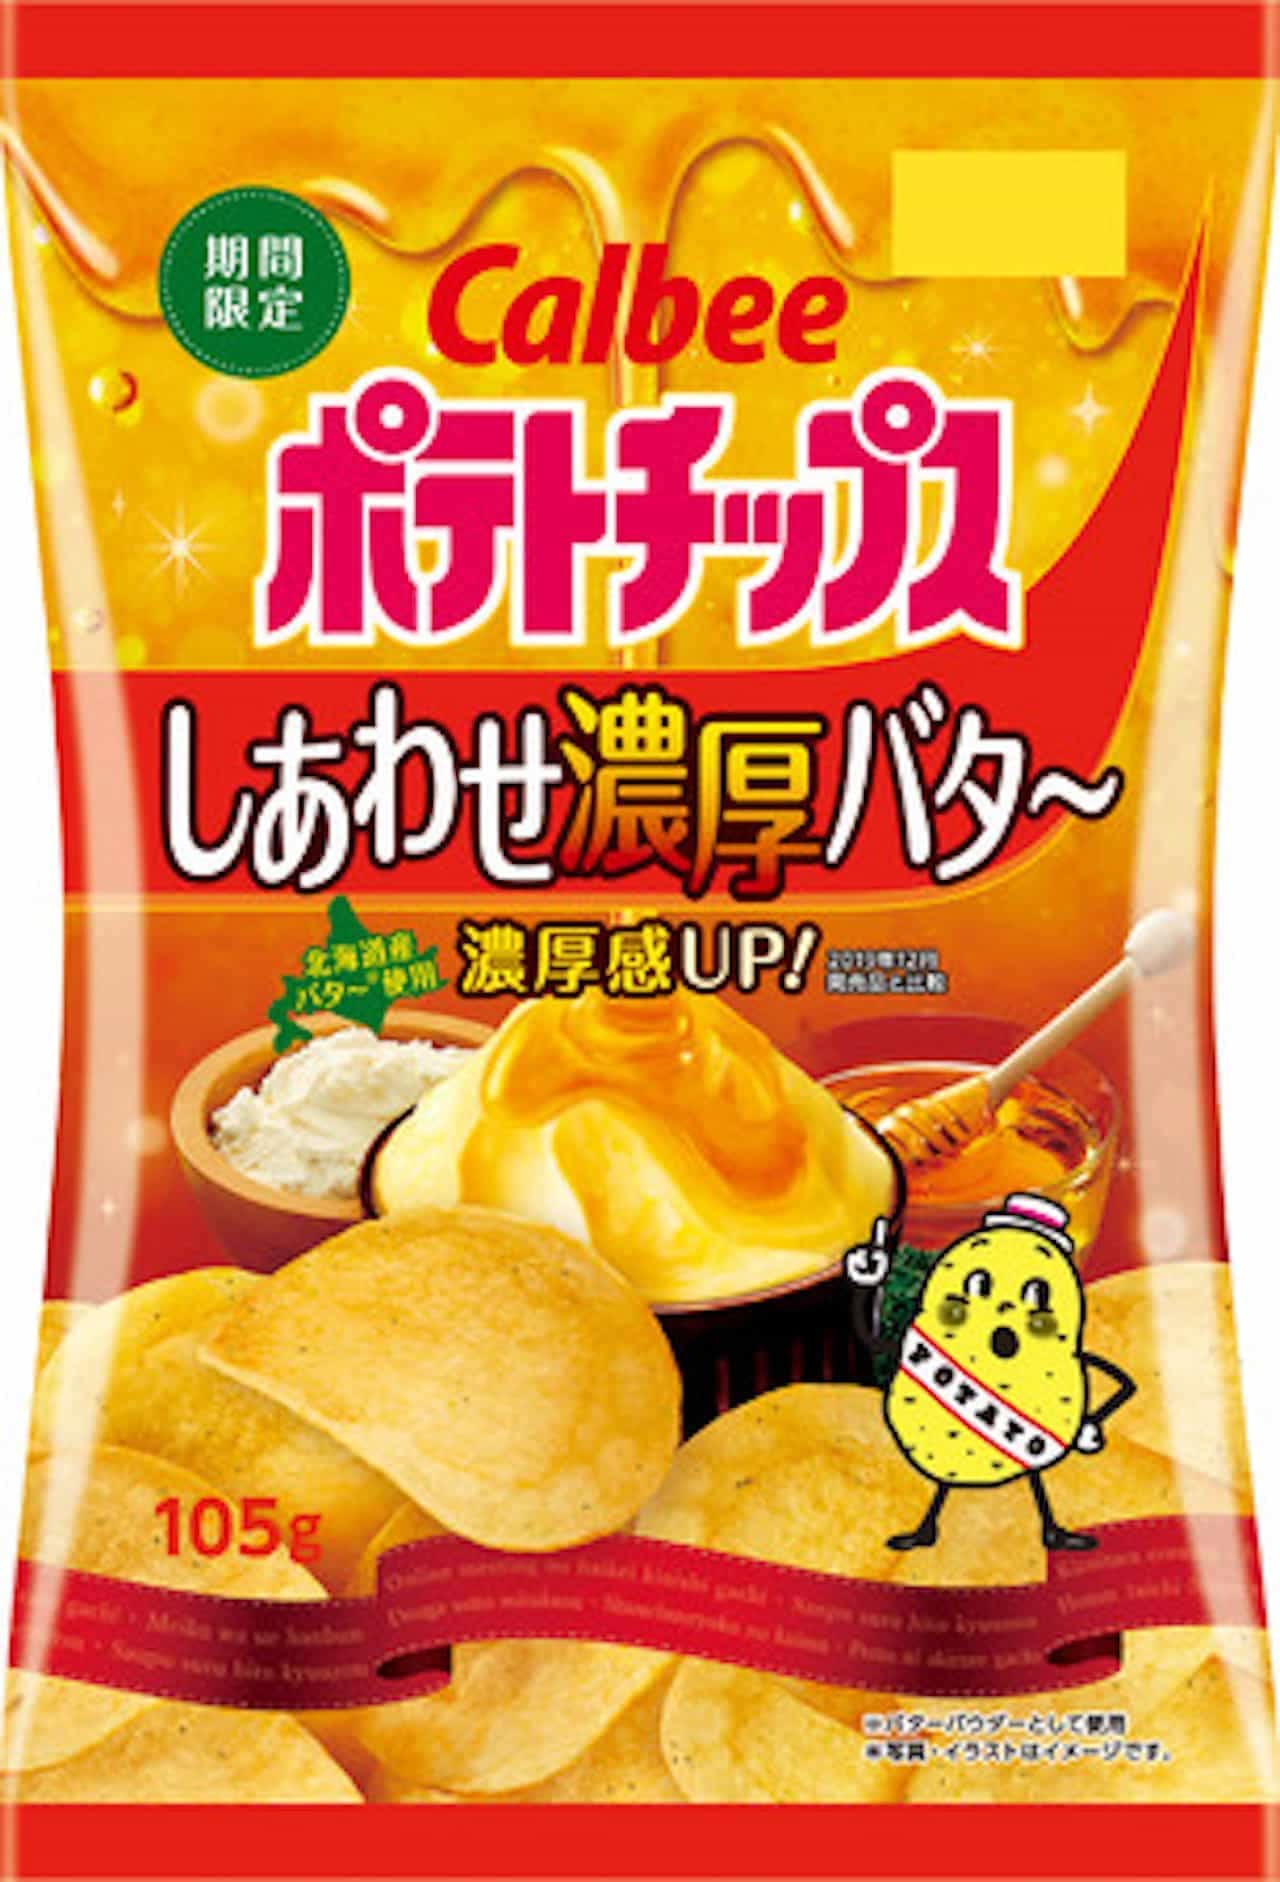 Convenience store limited "Potato Chips Happy Rich Bata"